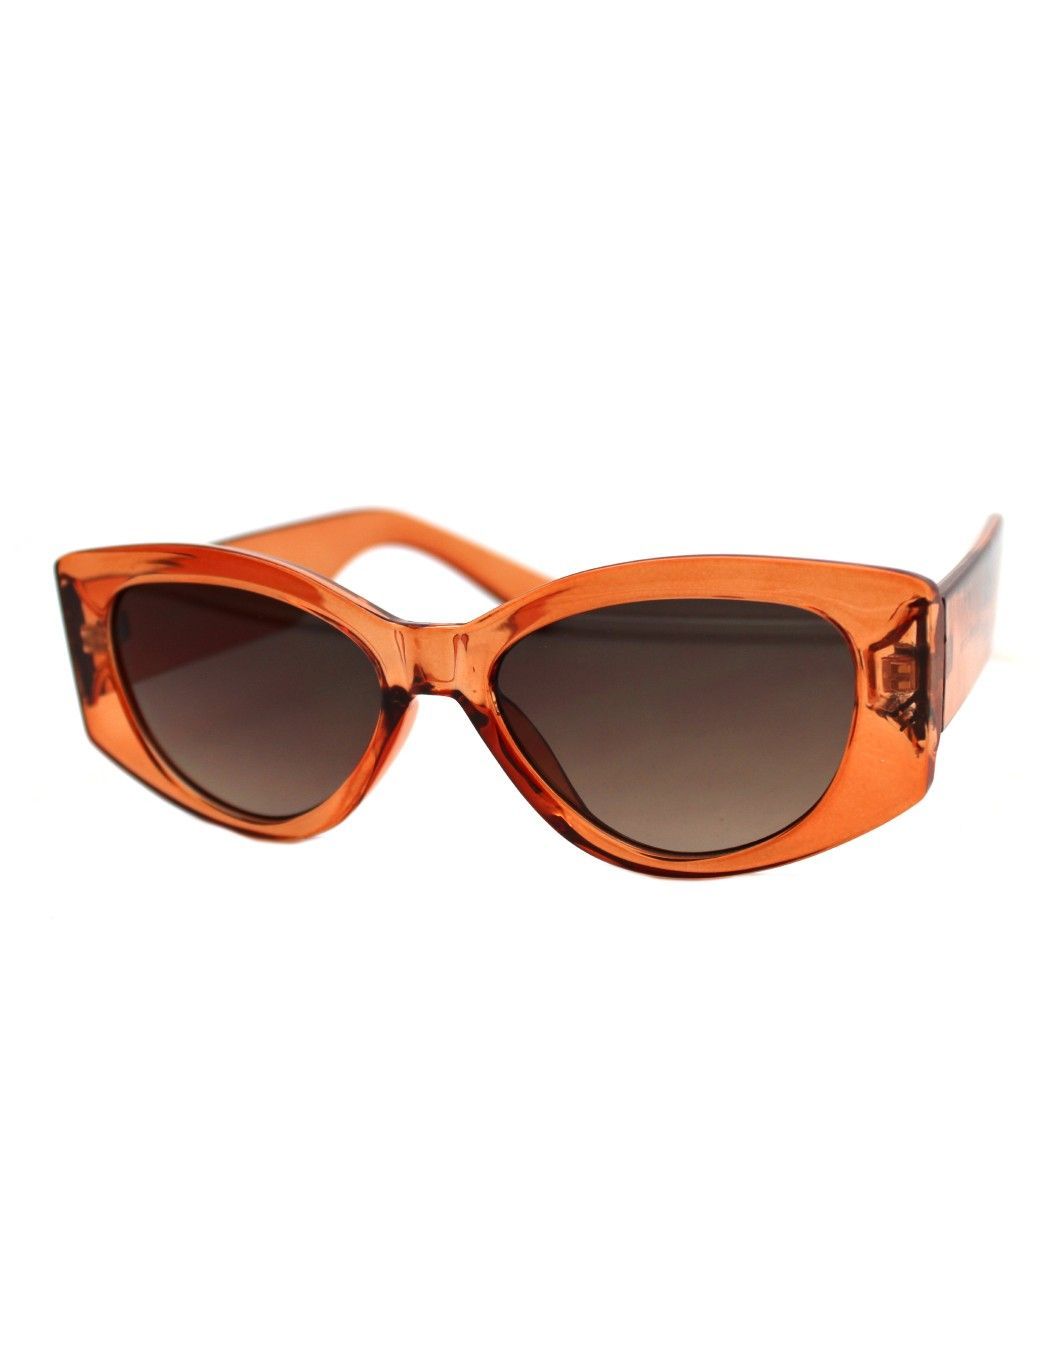 Statement Colored Frame Sunglasses | Women's Plus Size Accessories | ELOQUII | Eloquii